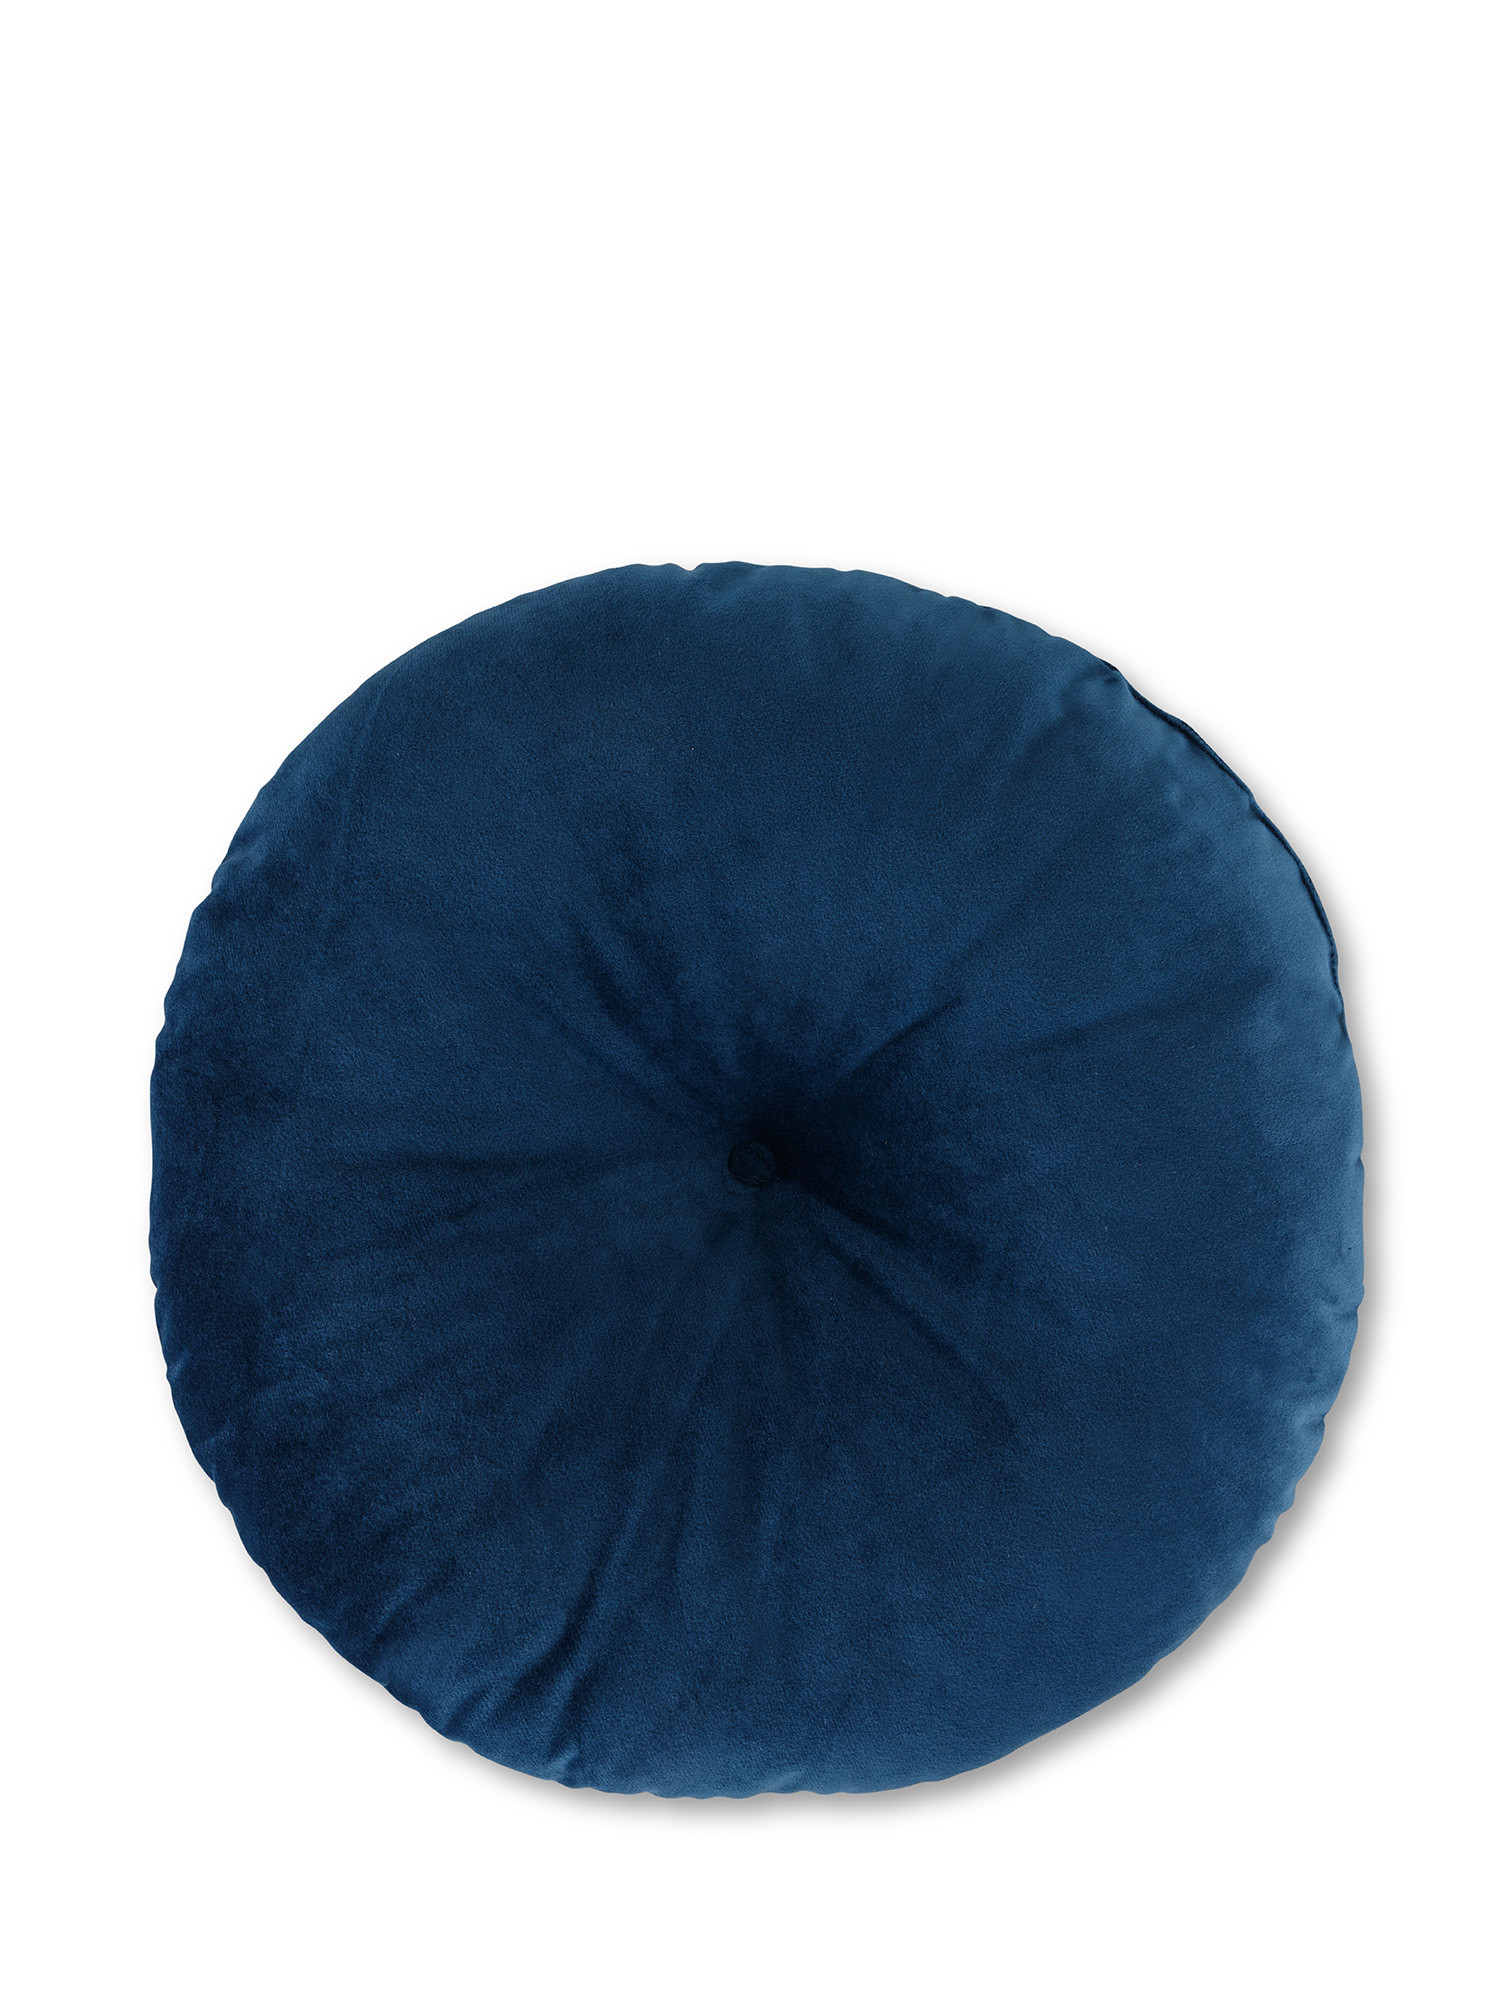 Cuscino rotondo in velluto, Blu scuro, large image number 1